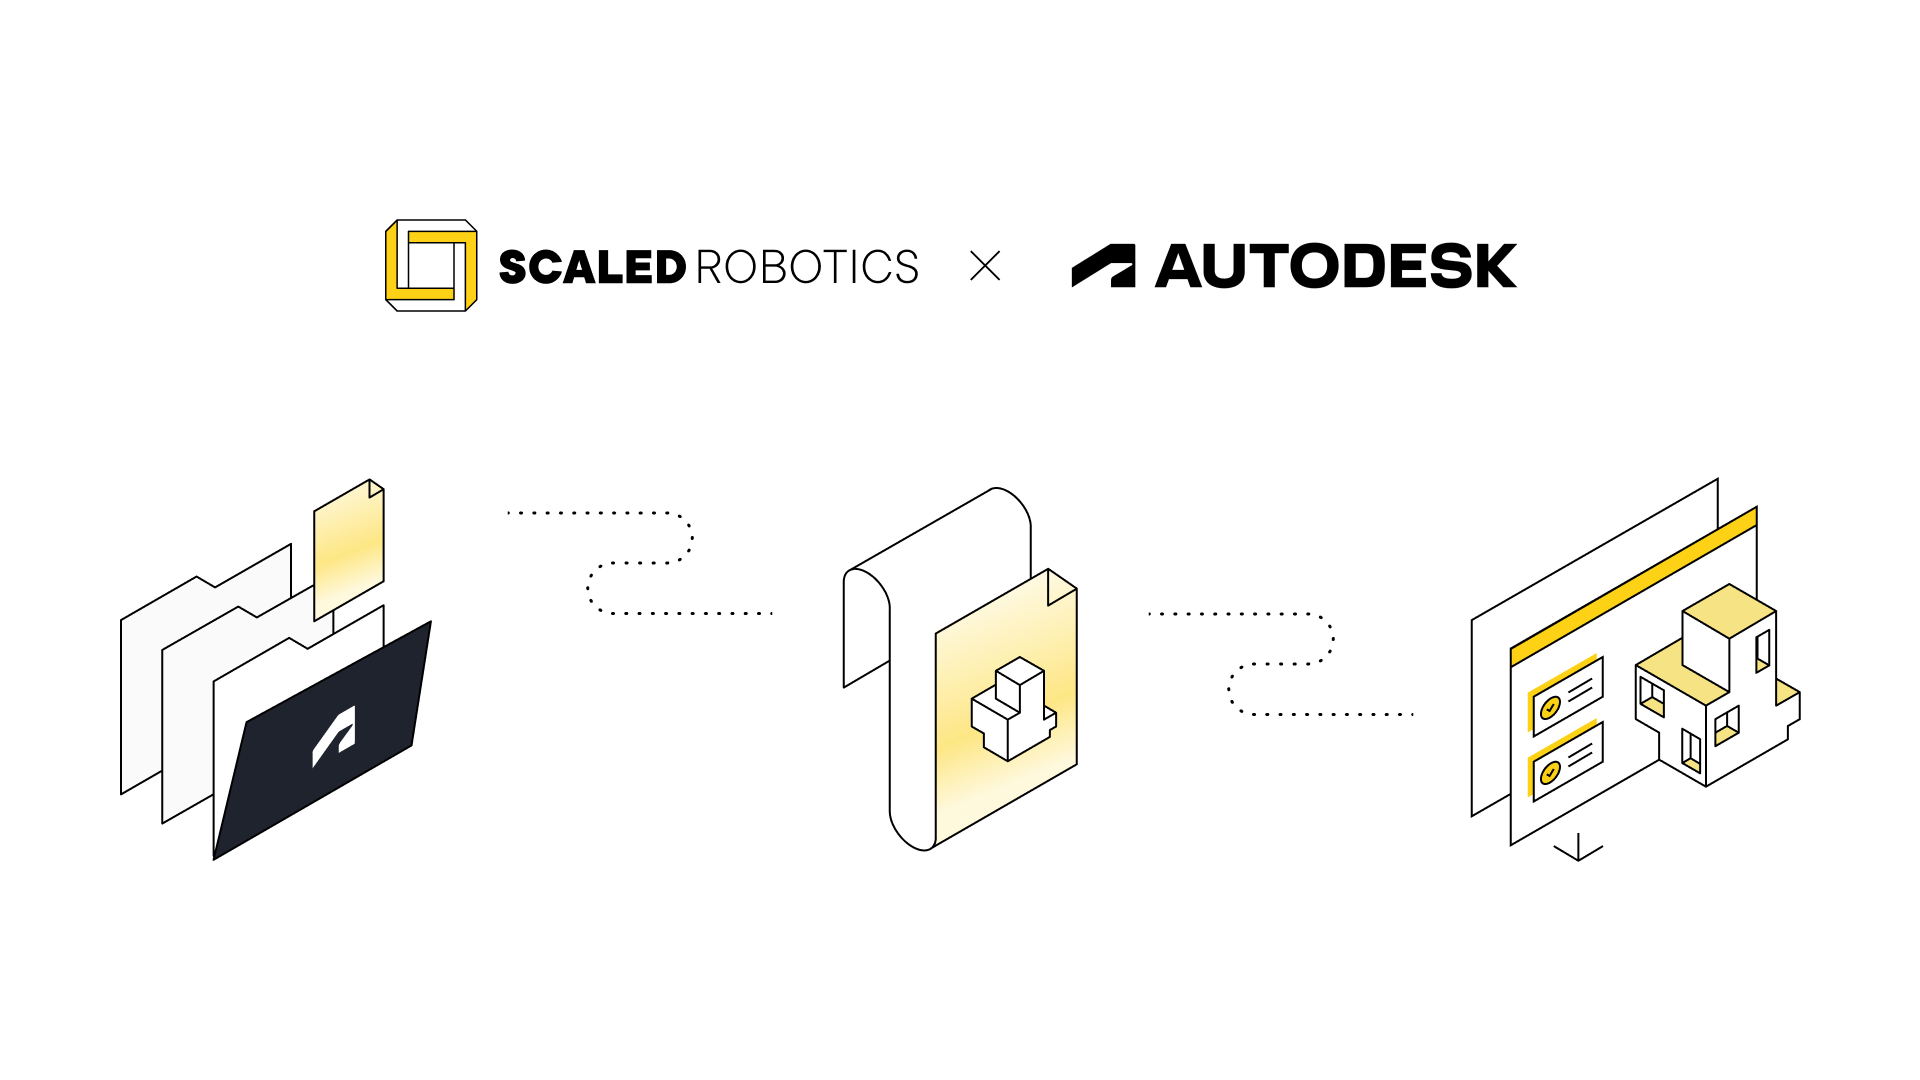 Scaled Robotics also integrates Autodesk